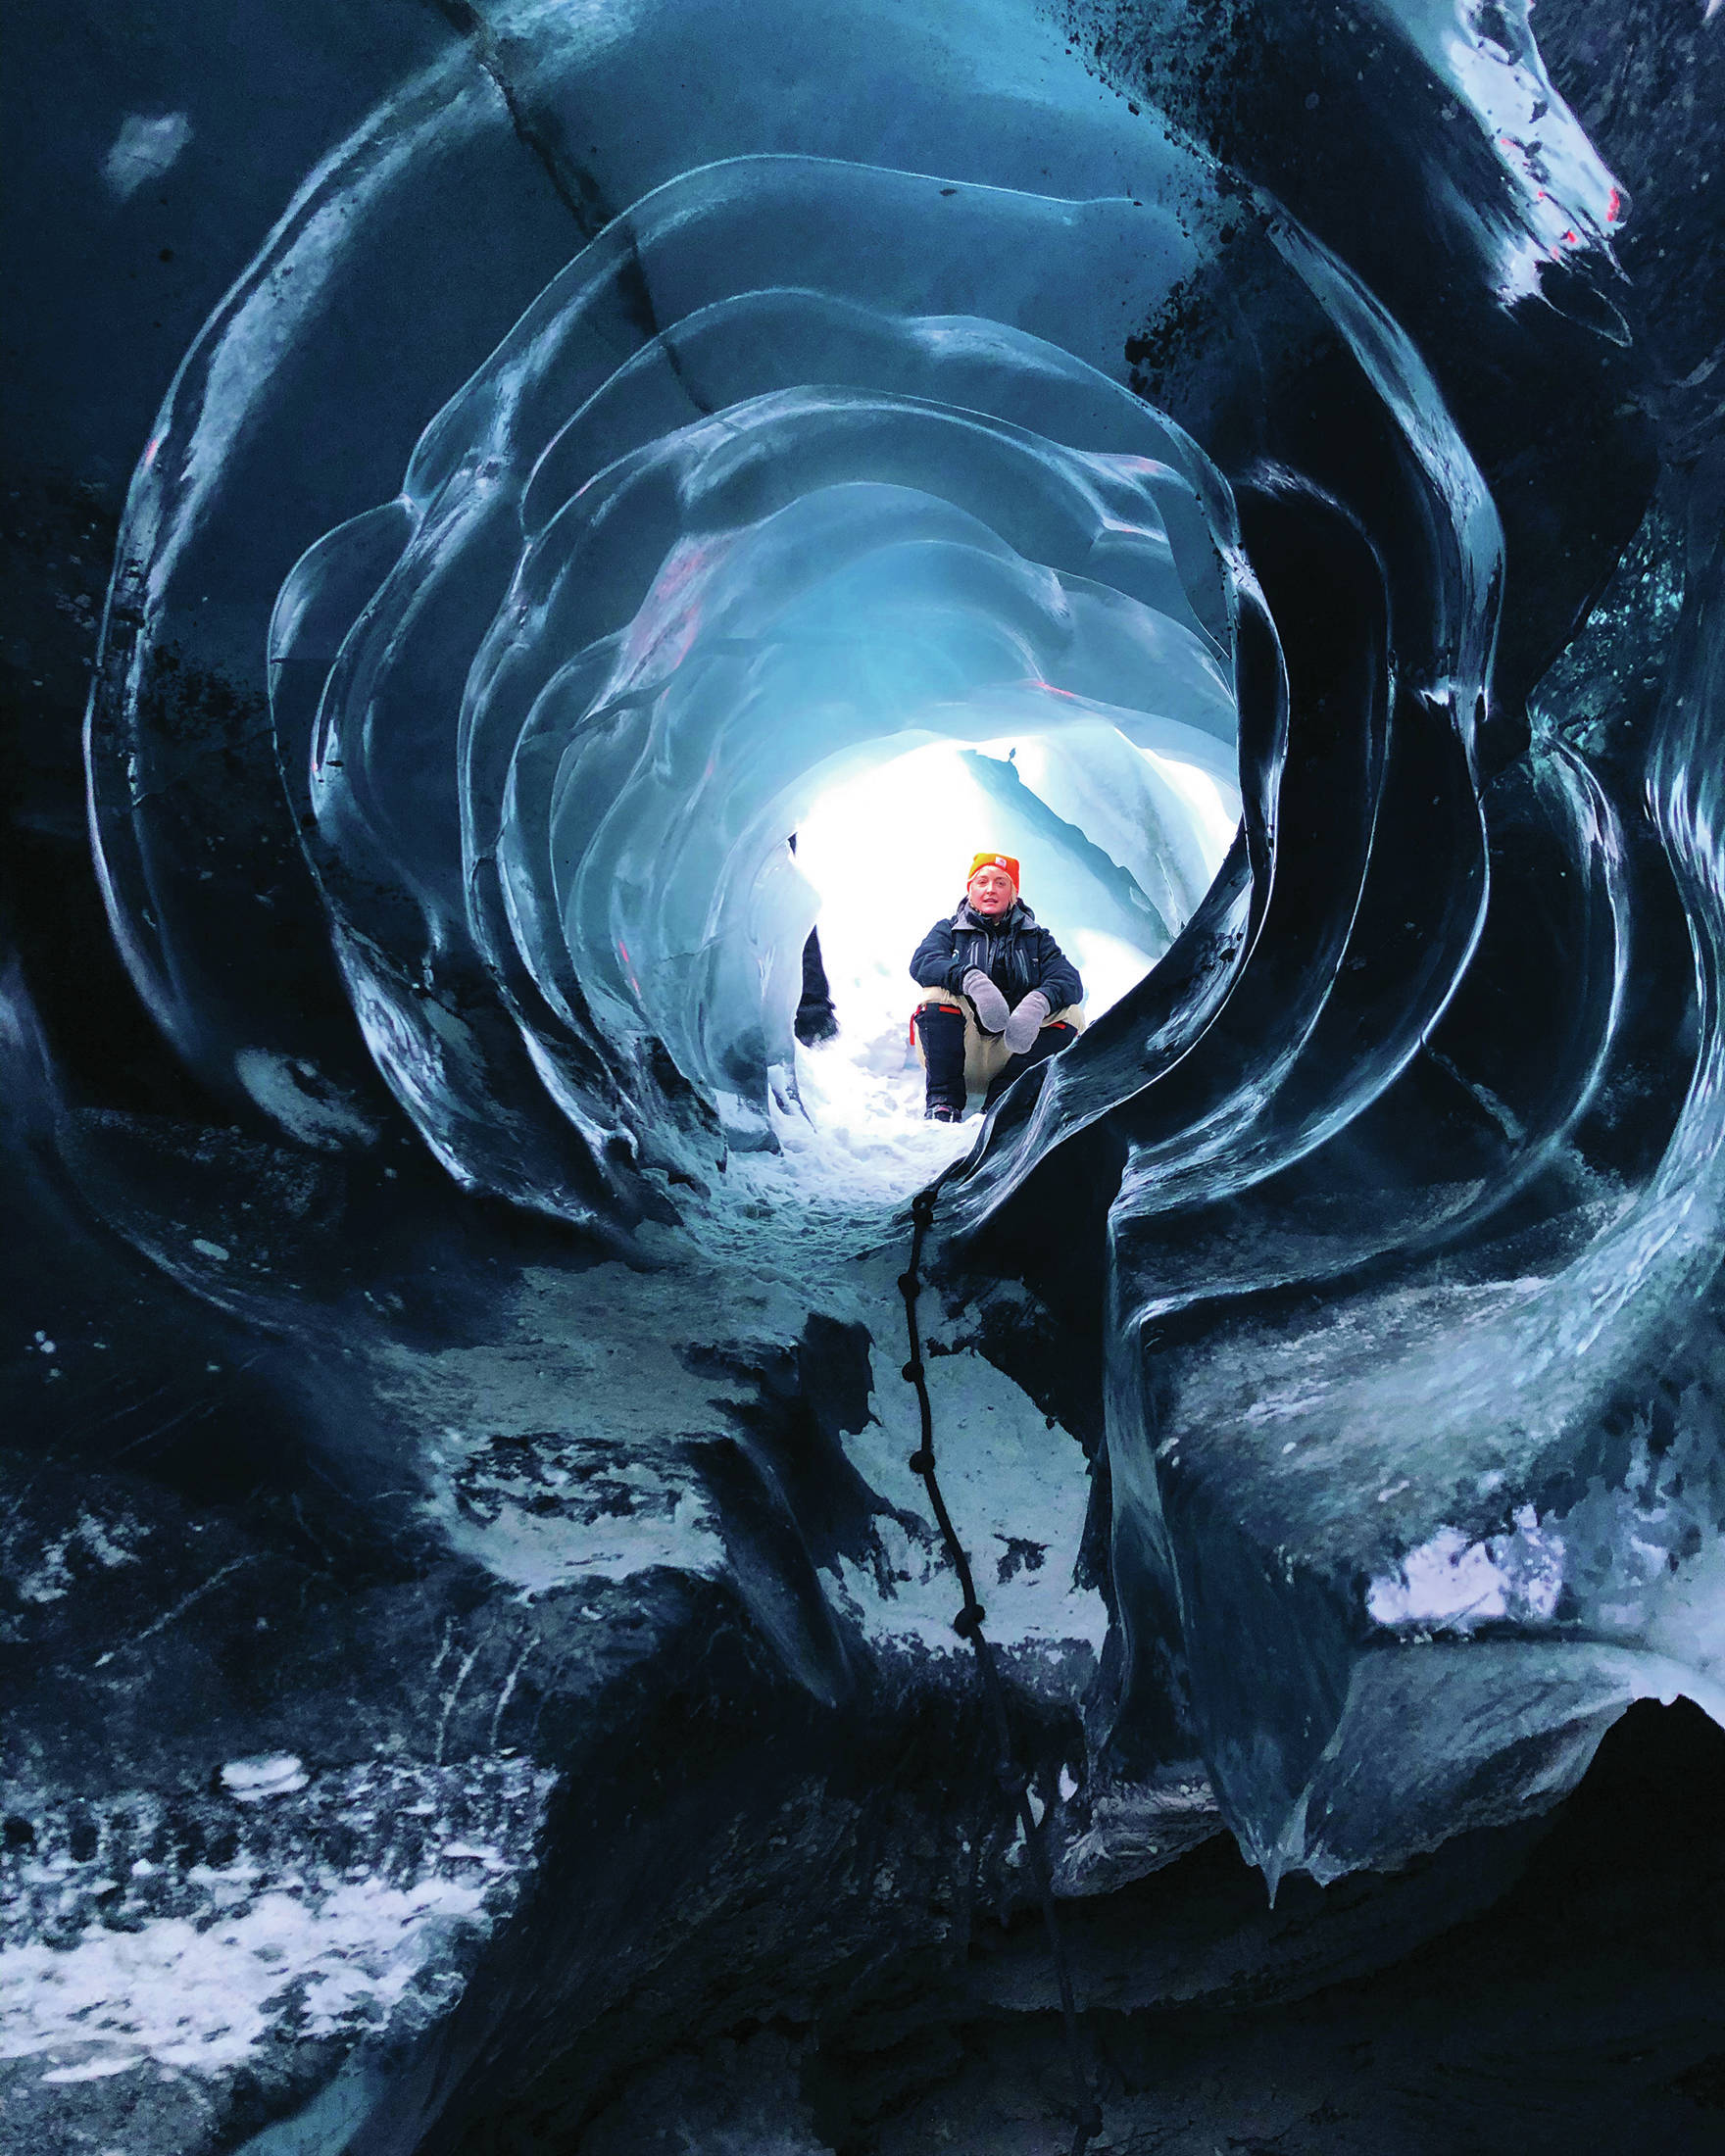 A guide waits for the author to climb through an ice tunnel at the Matanuska Glacier on Jan. 17, 2021 in the Matanuska-Susitna Borough, Alaska. (Photo by Megan Pacer/Homer News)